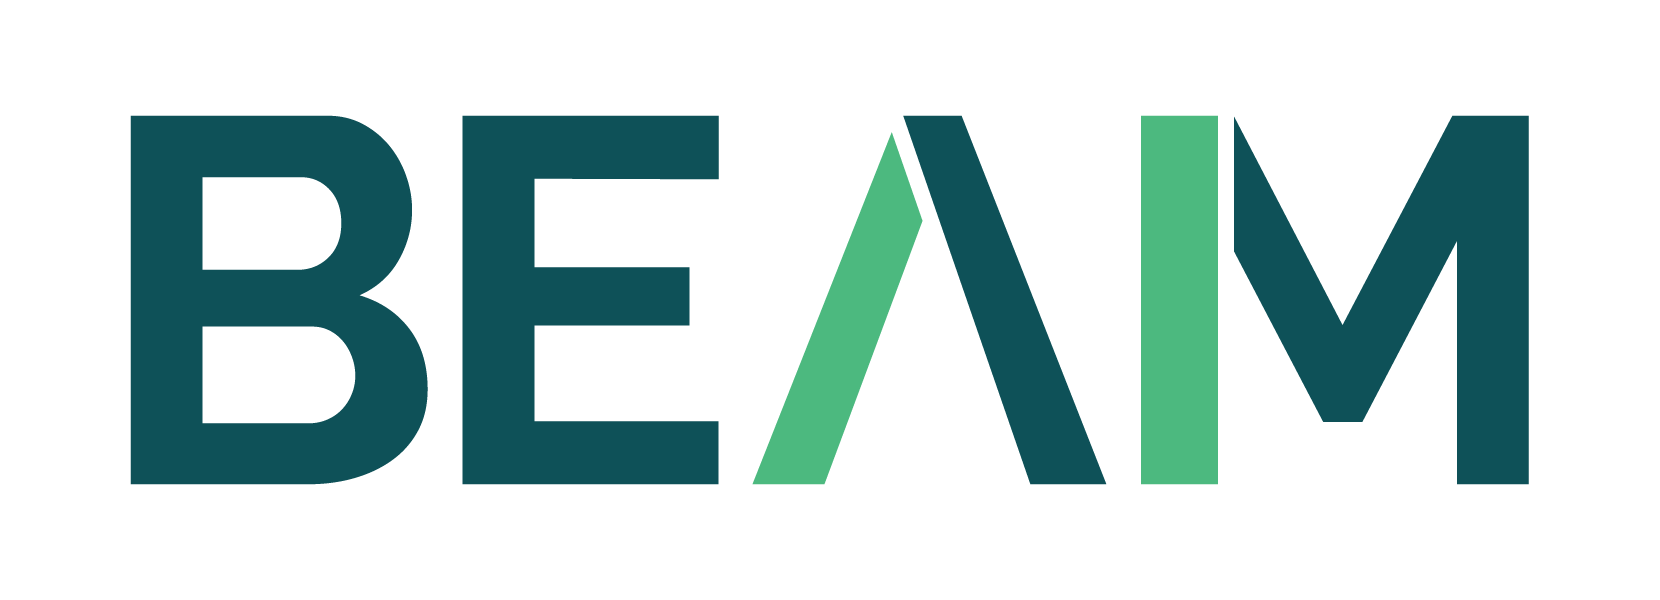 Beam AI Logo